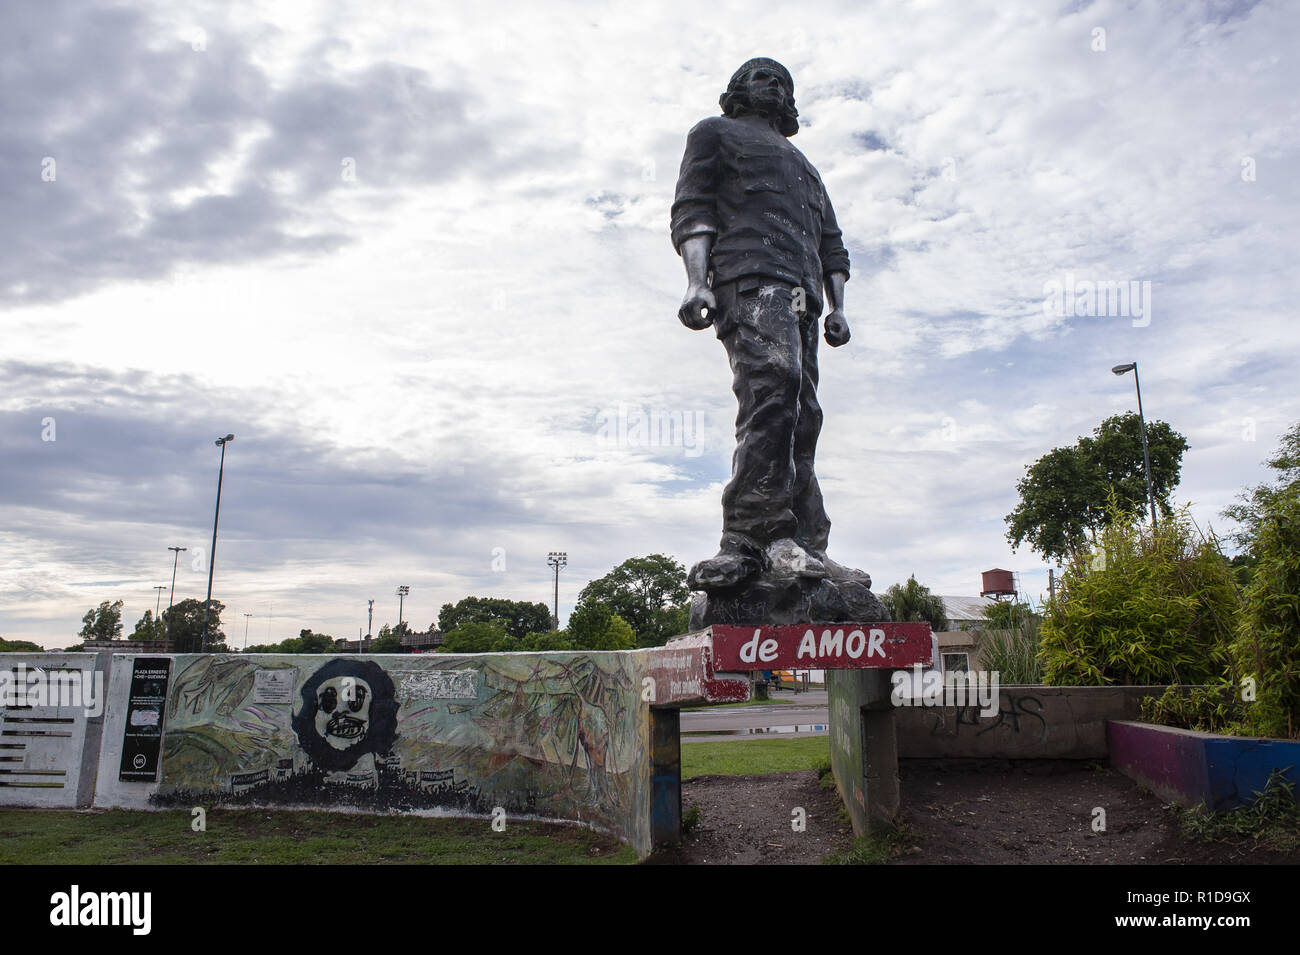 Ernesto 'Che' Guevara: The Full Story Of The Revolutionary Icon